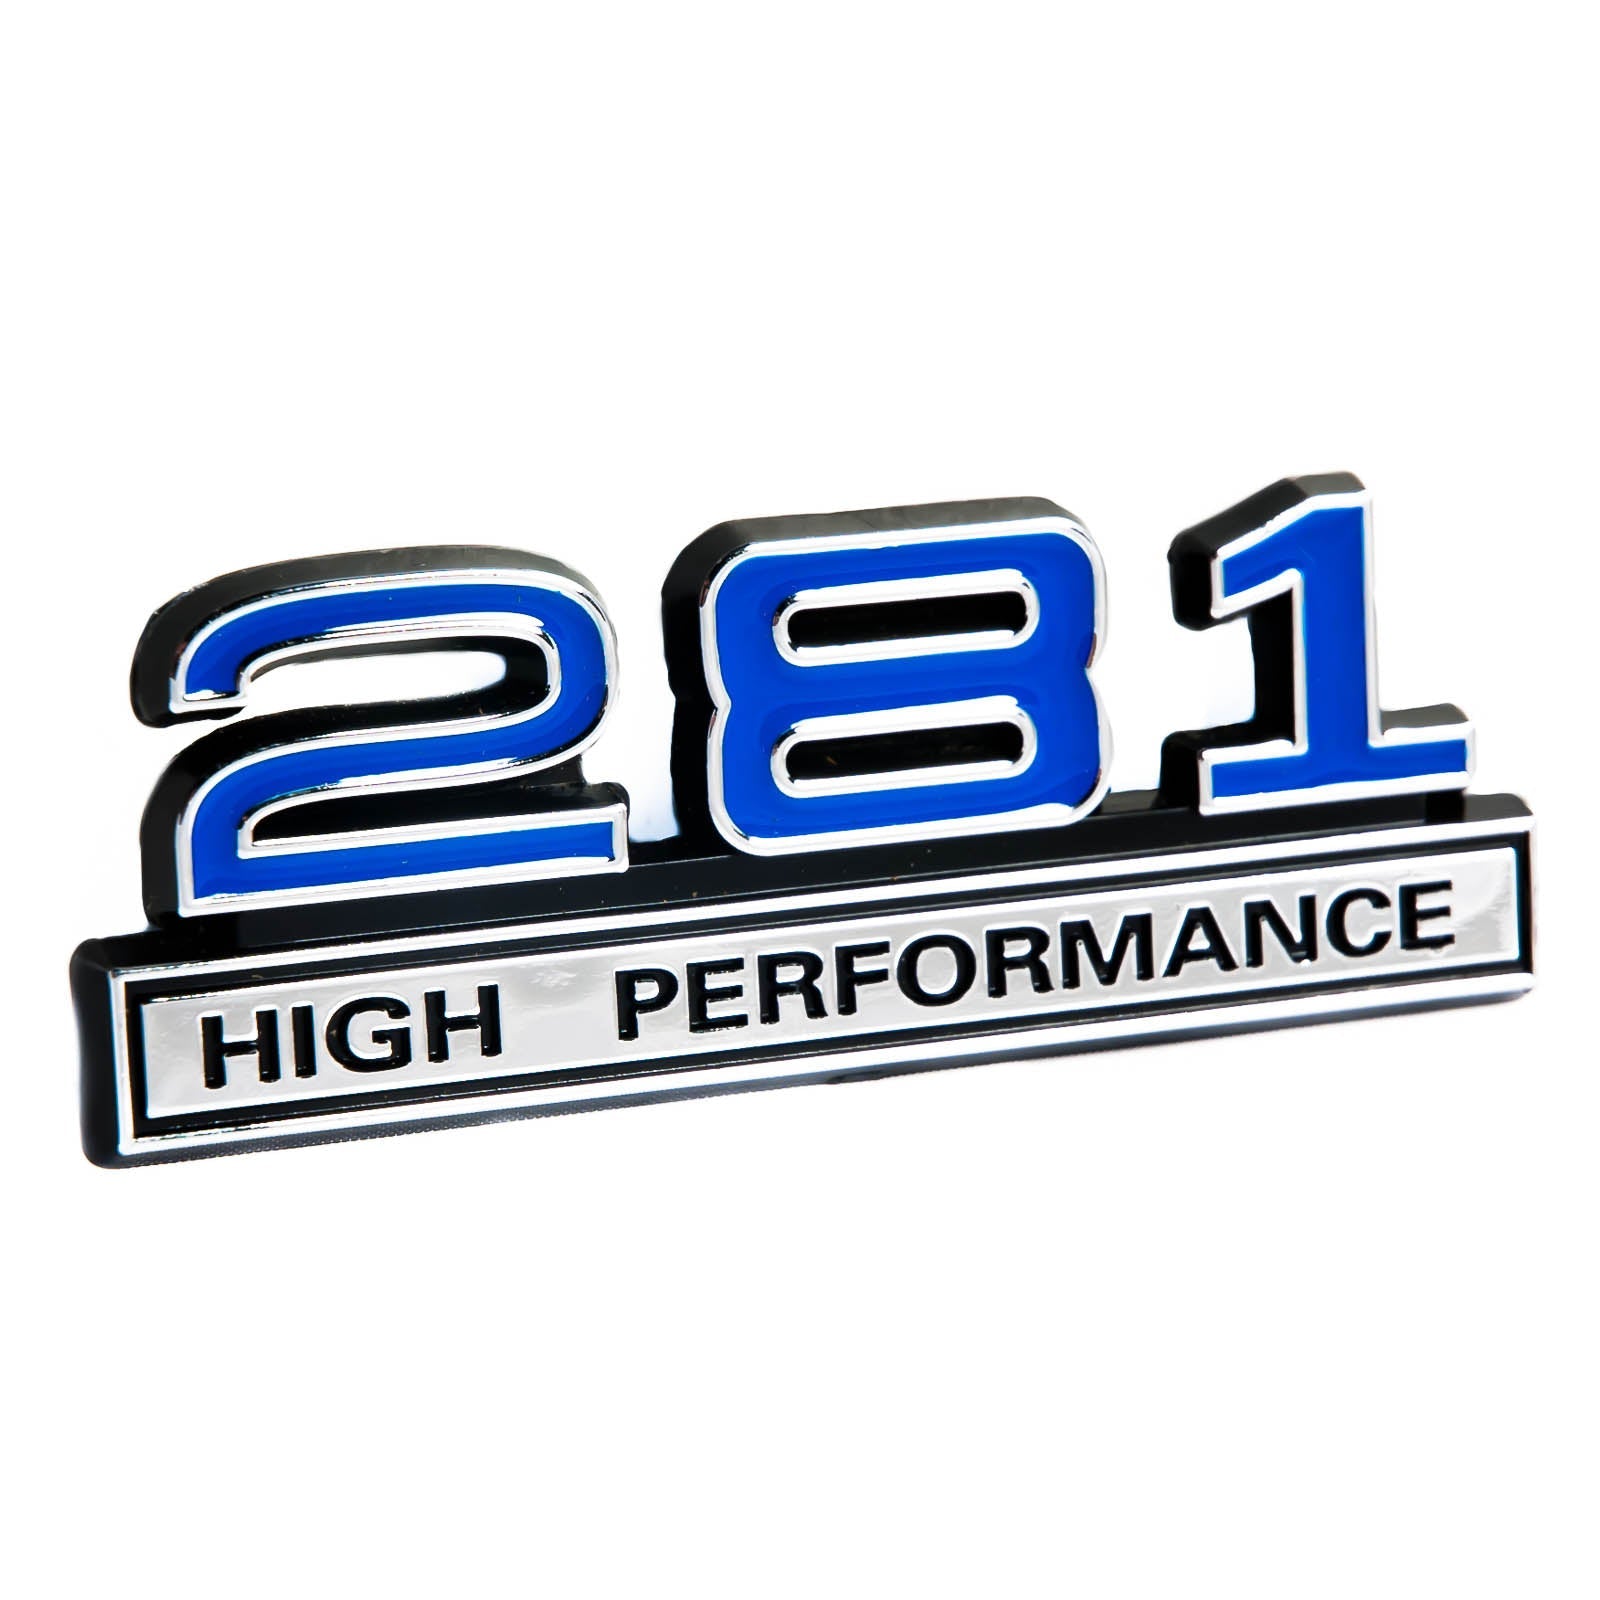 281 4.6 Liter High Performance Engine Emblem Badge in Blue & Chrome - 4" Long